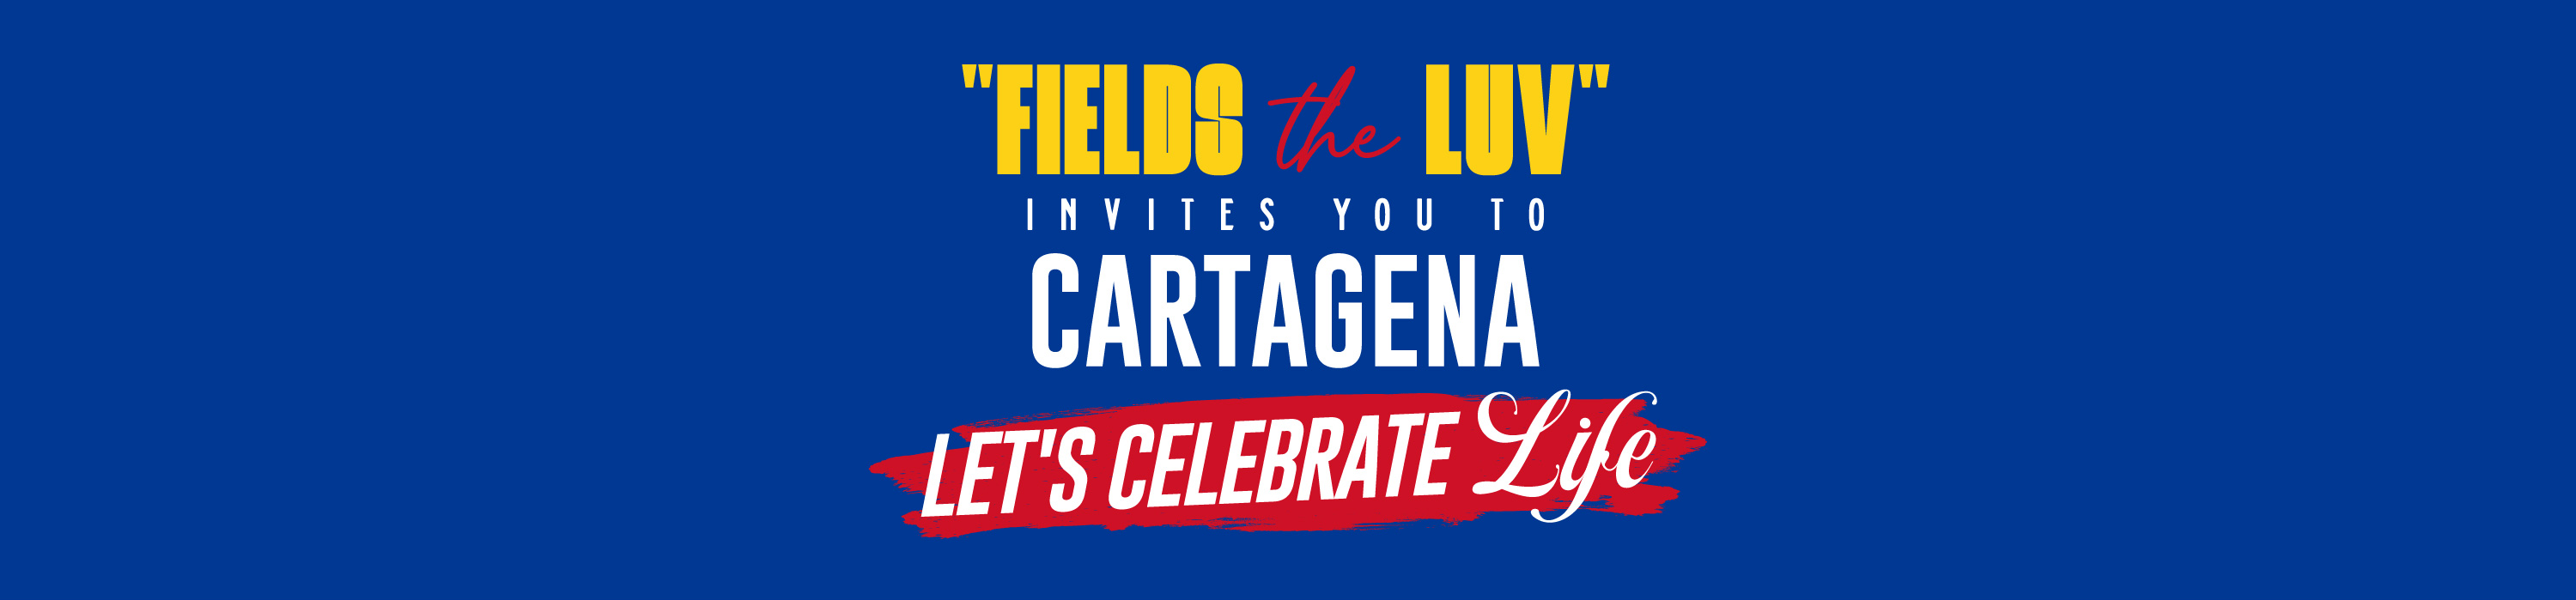 fields-the-luv-cartagena-foot-logo